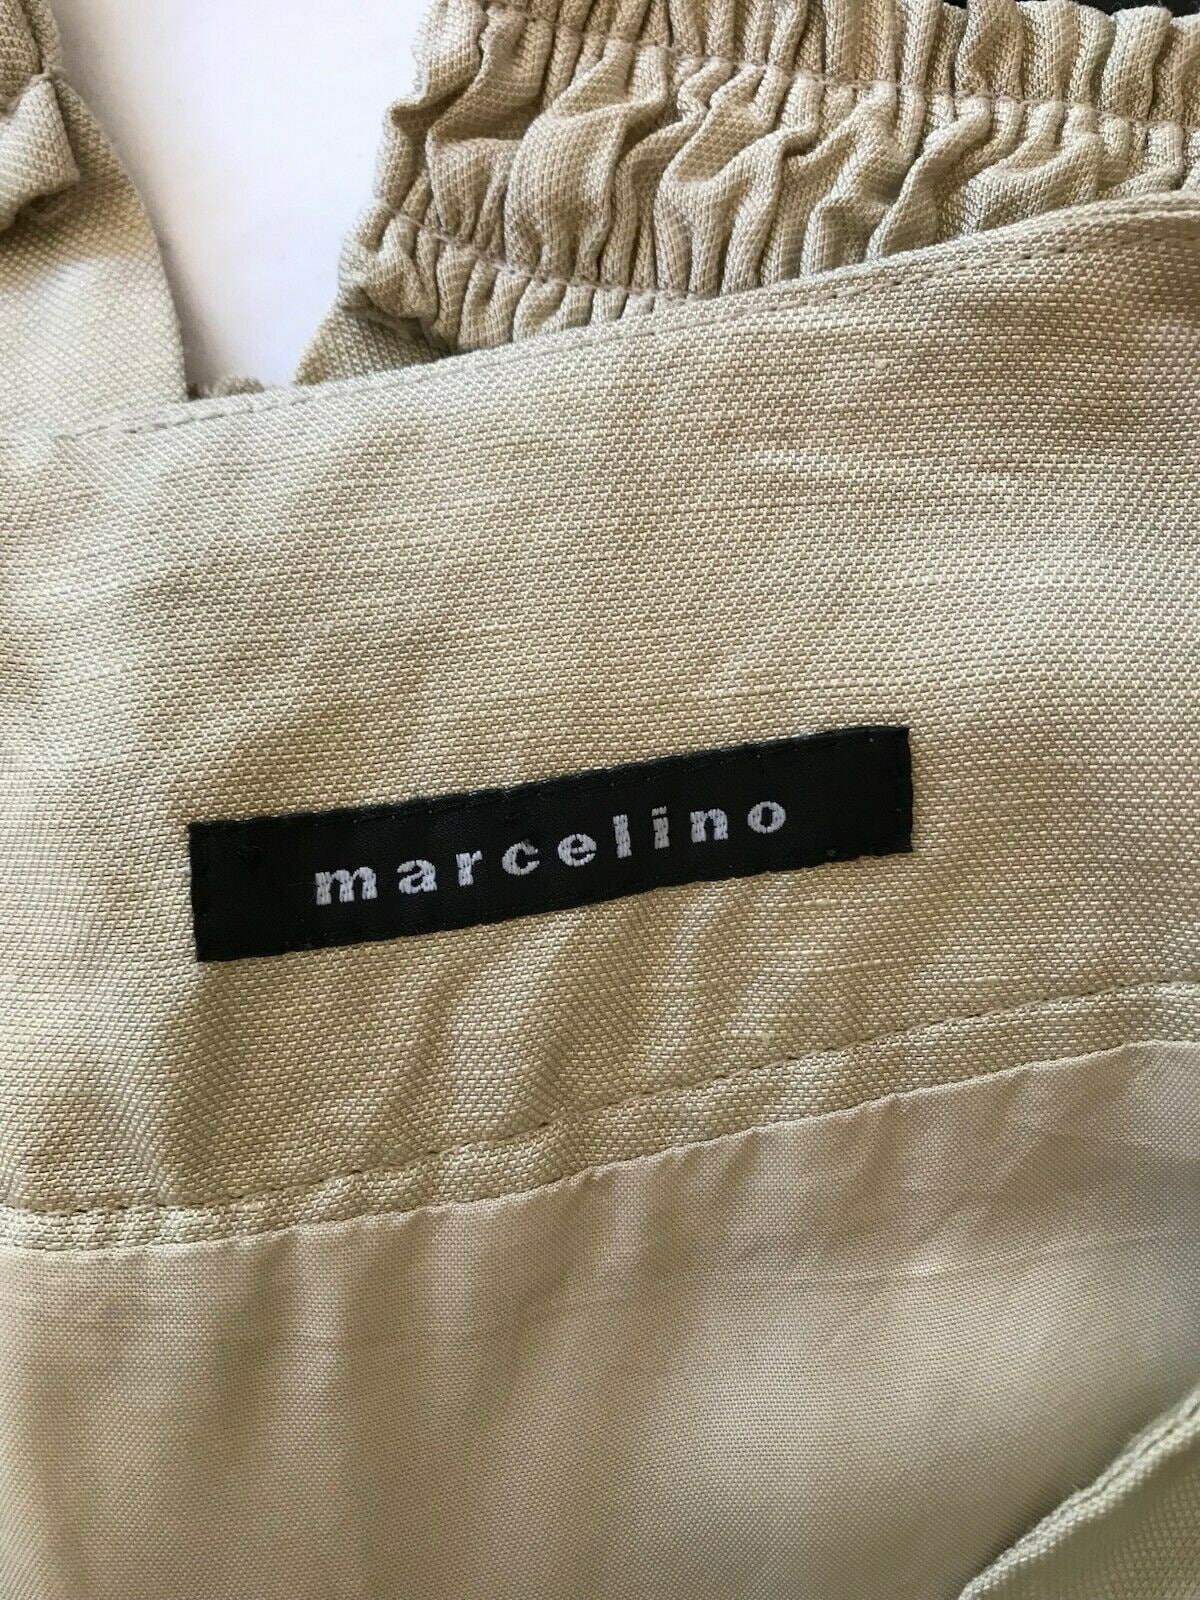 Marcelino Light Beige Linen Mix Pencil Skirt UK 14 US10 EU 42 Timeless Fashions